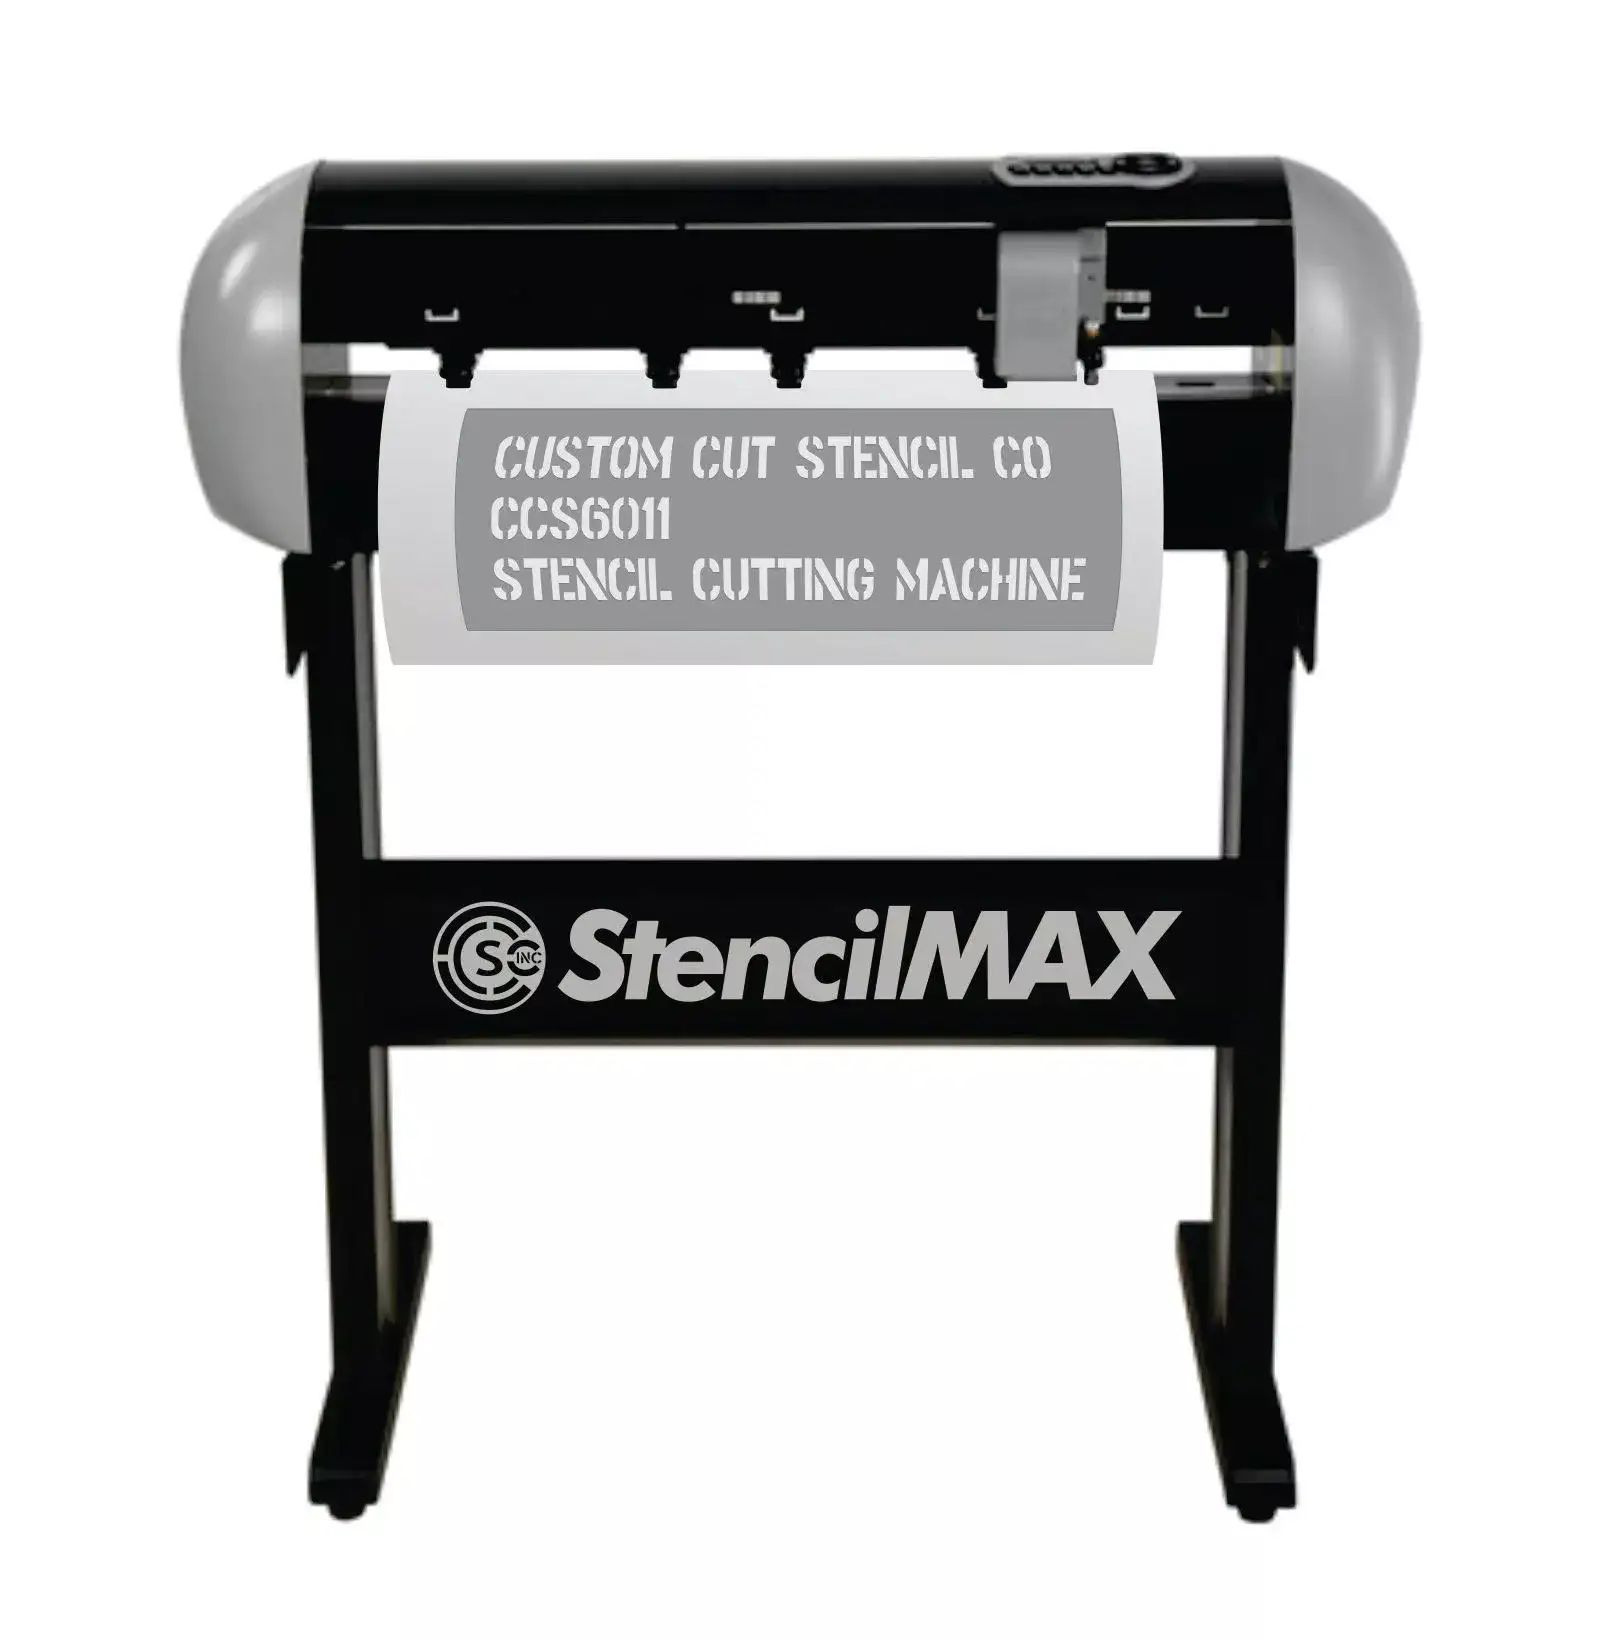 Stencil Maker, Stencil Machine, Stencil Cutter in Stock - ULINE